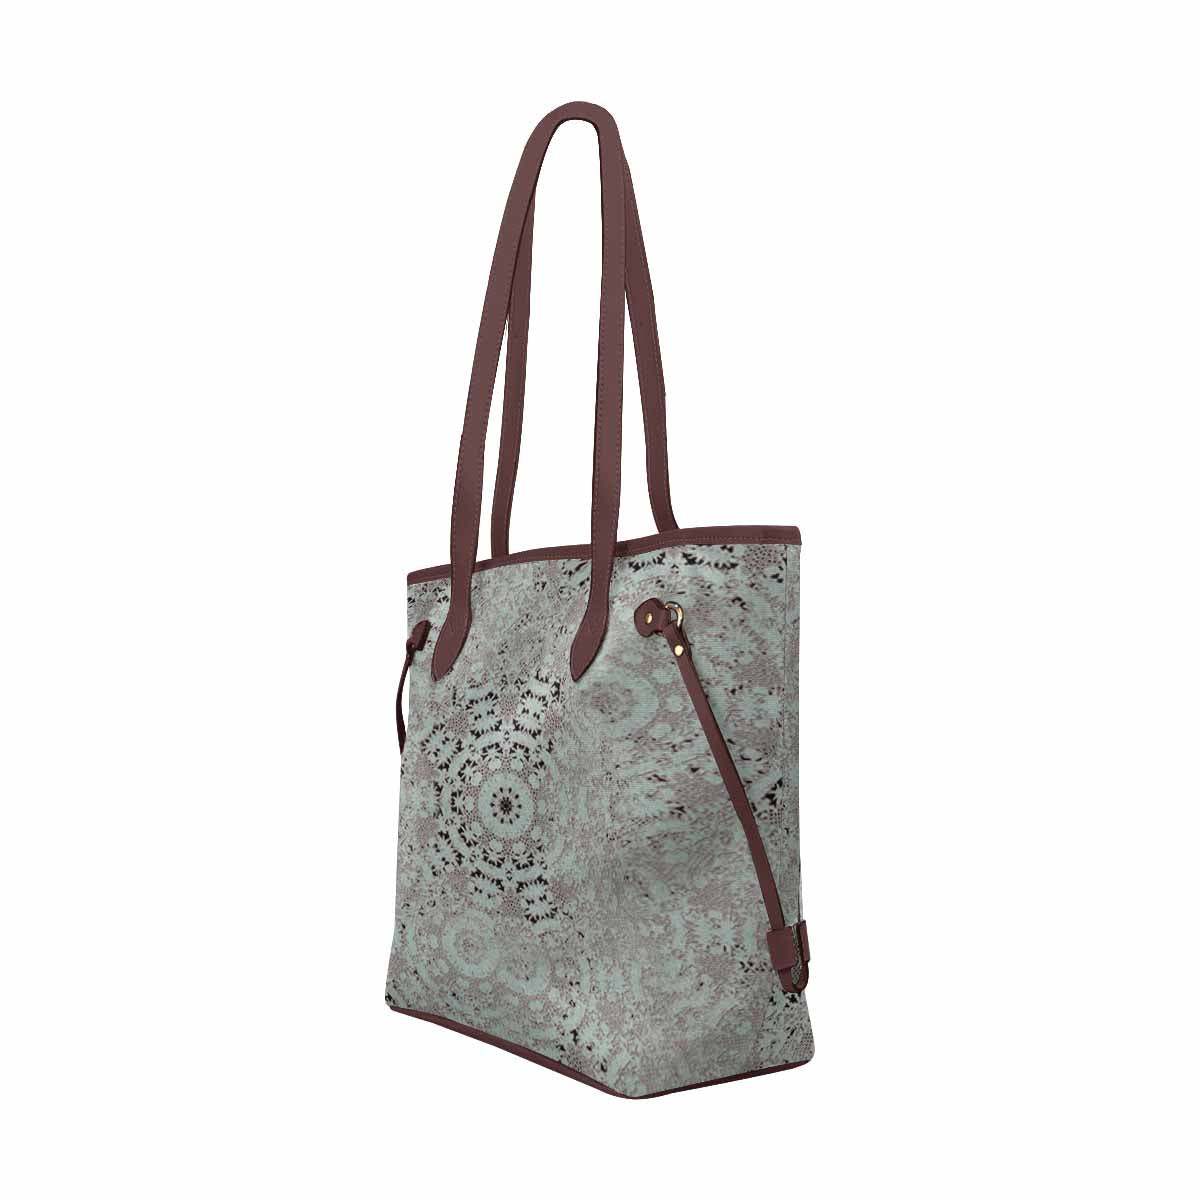 Victorian printed lace handbag, MODEL 1695361 Design 51